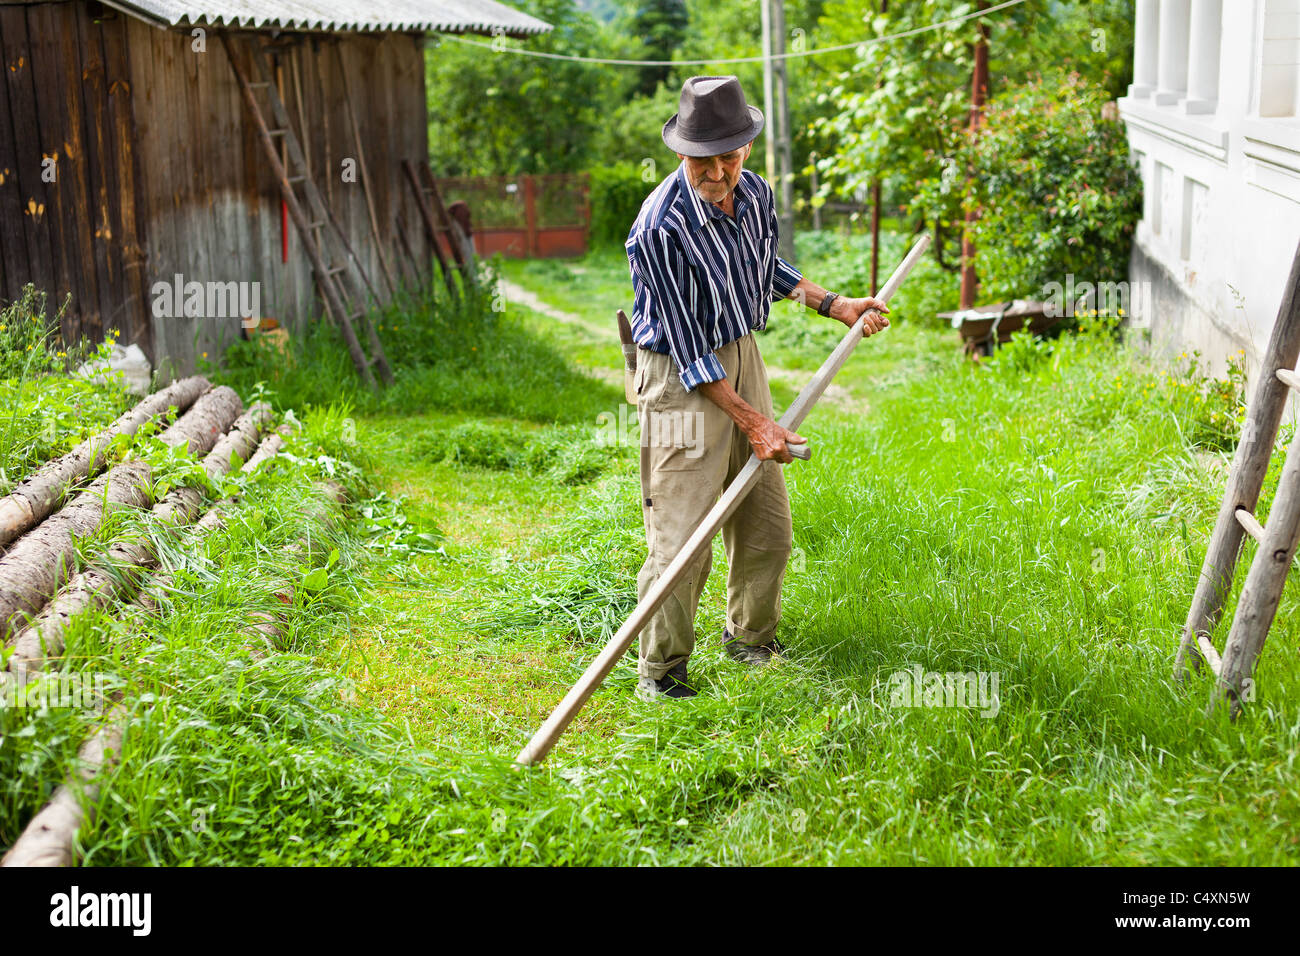 Senior farmer using scythe to mow the lawn traditionally Stock Photo